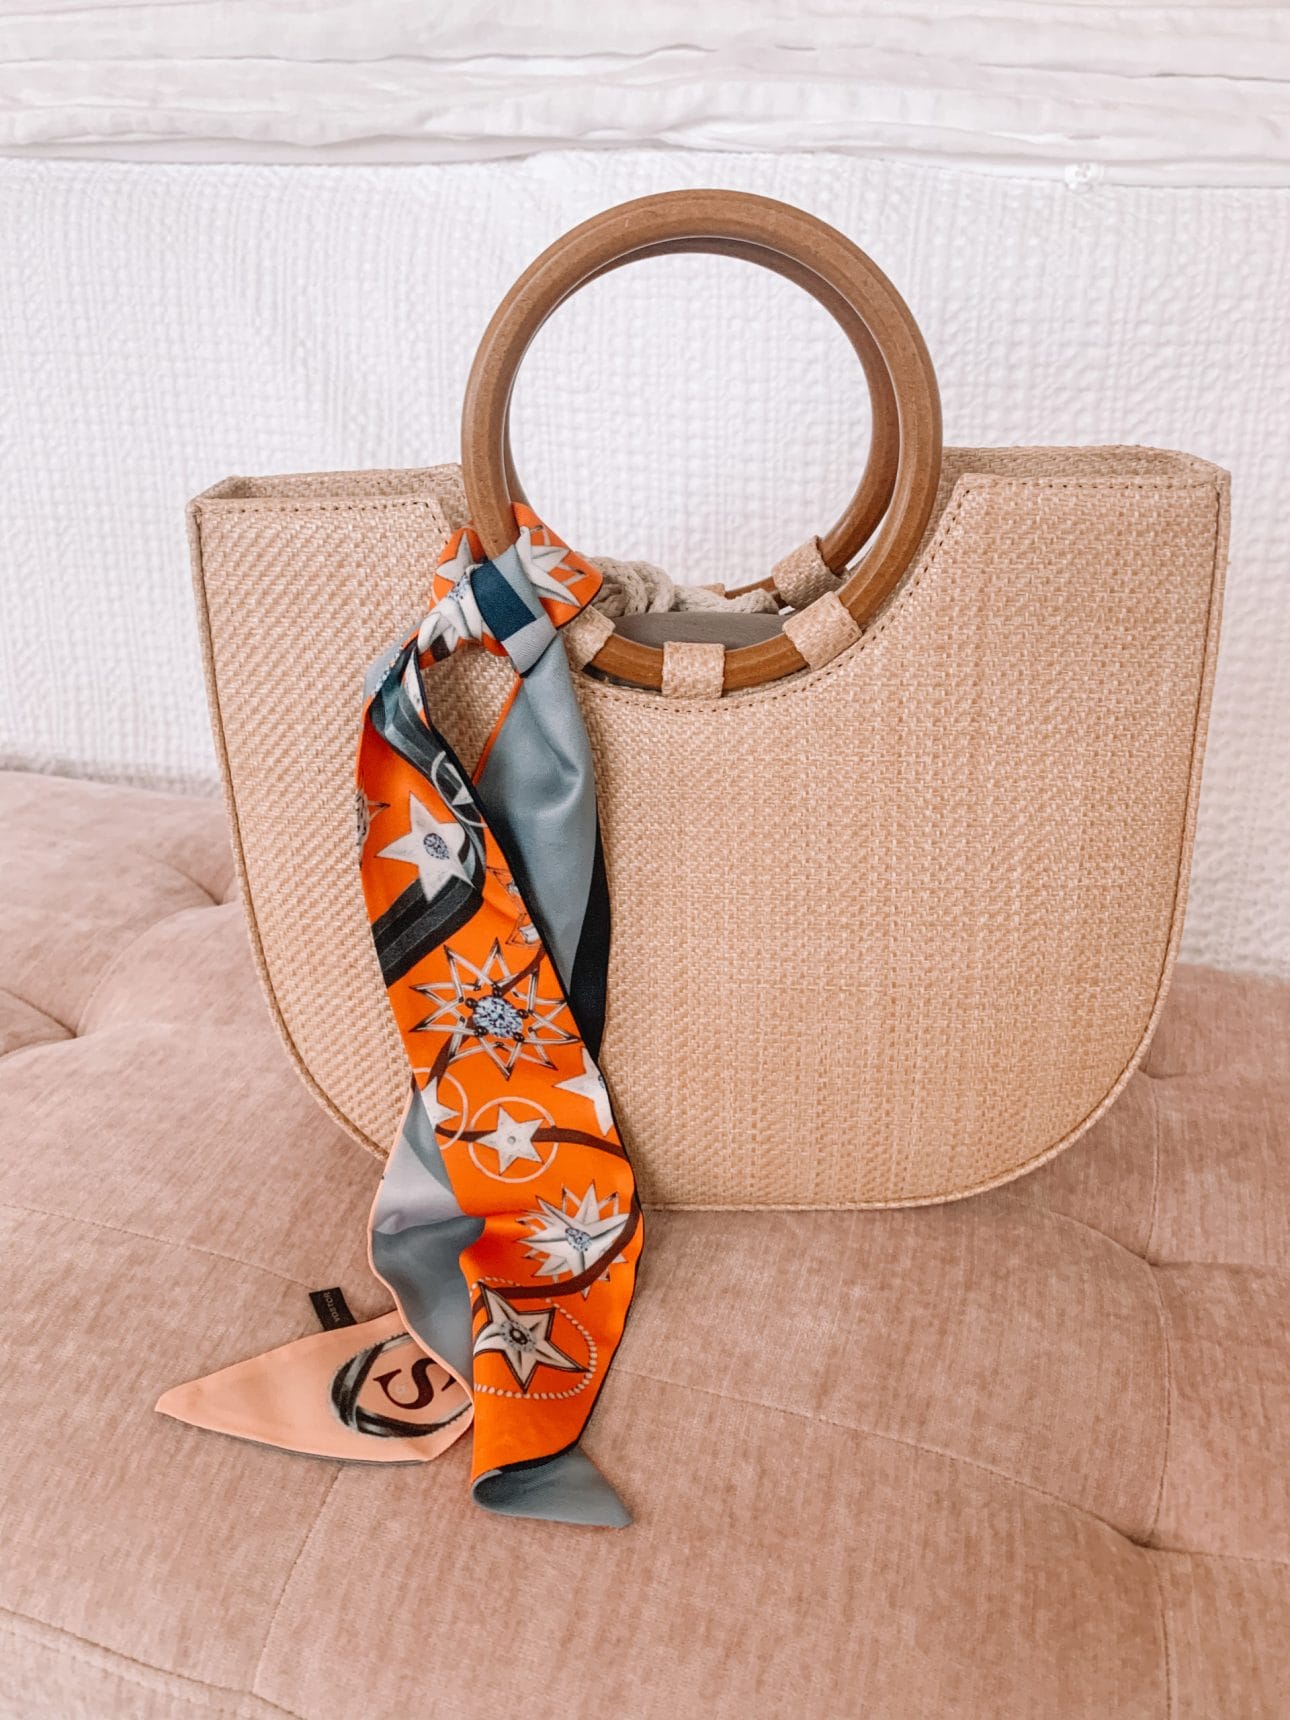 Amazon Fashion - Woven Tote Bag